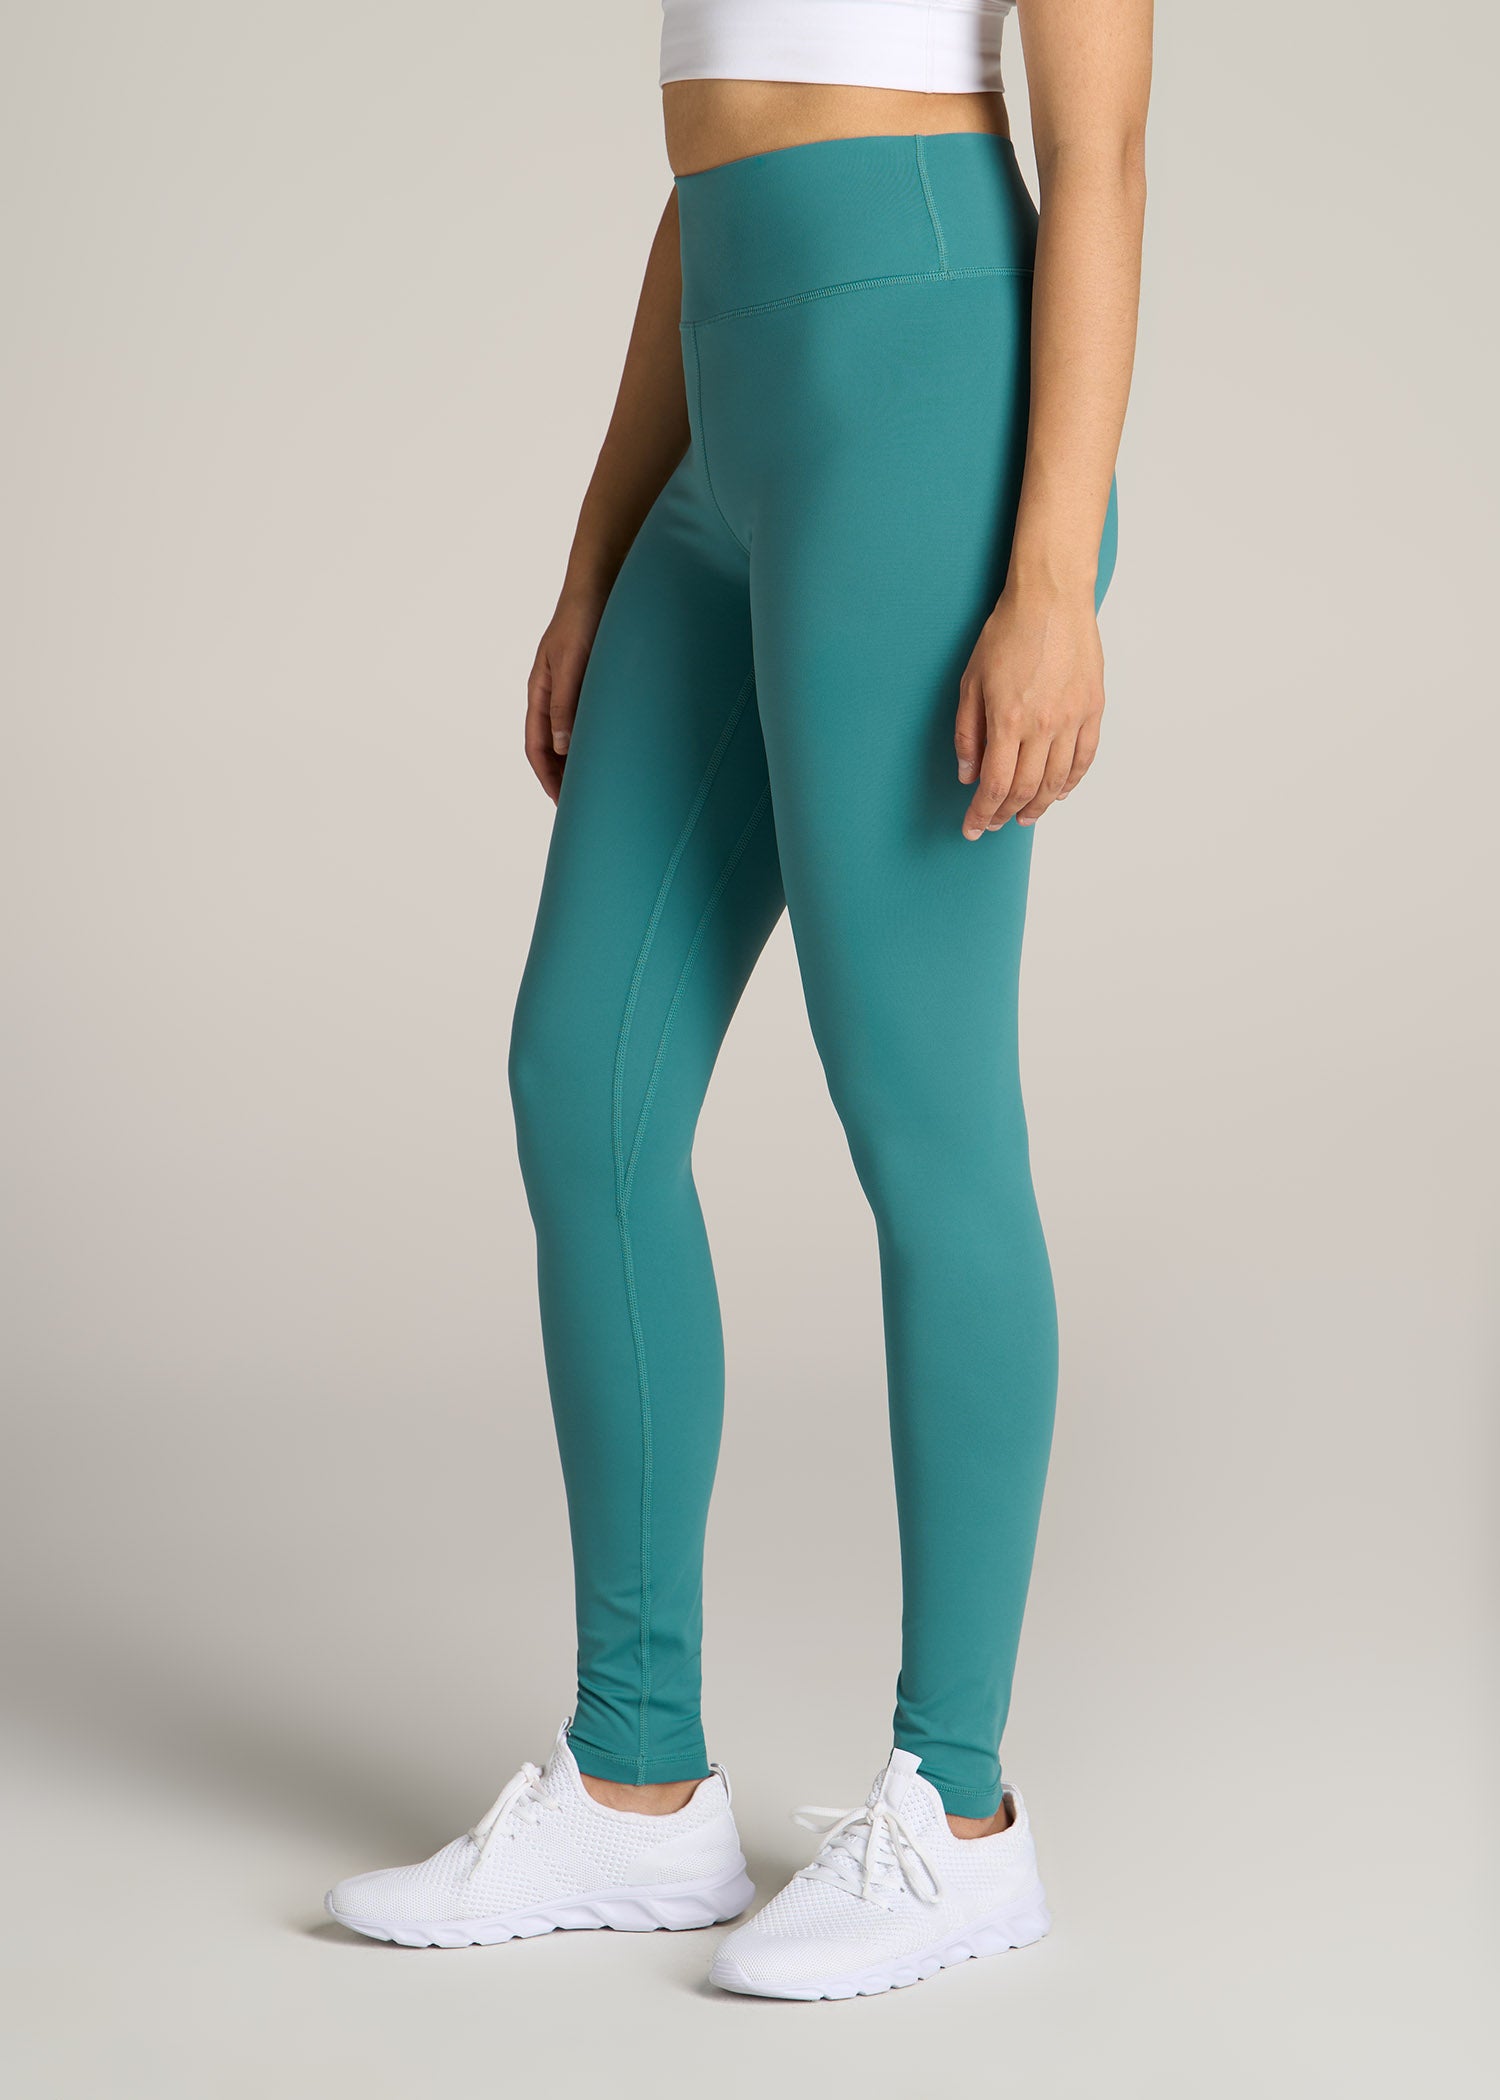 Brigitte women's turquoise basic leggings - Legeez